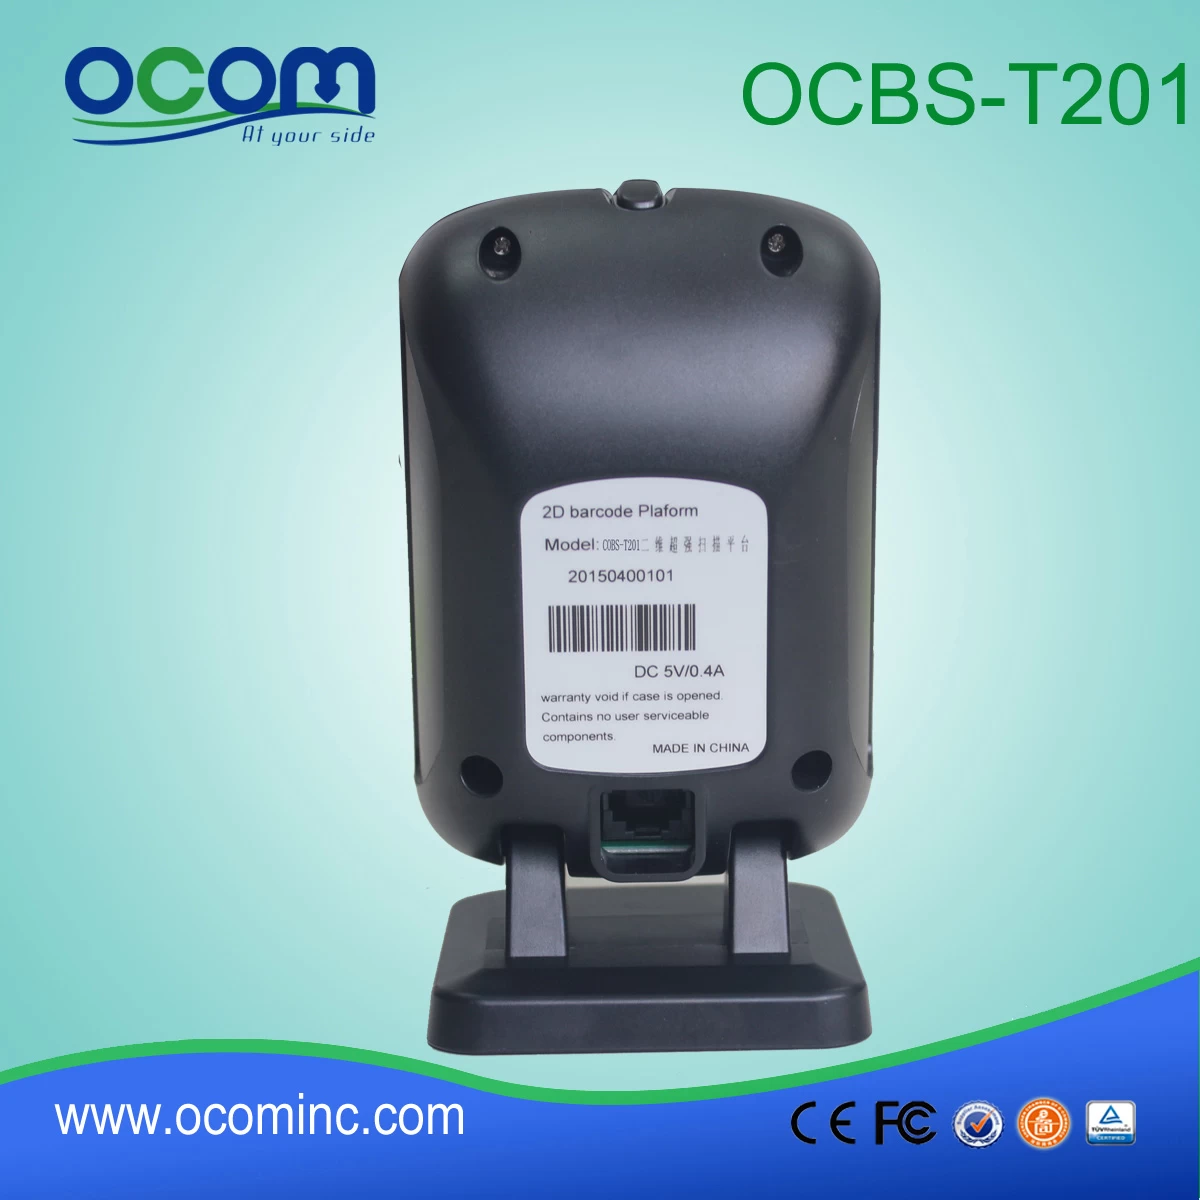 OCBS-T201 Omni-directional 2D Barcode Scanner Reader